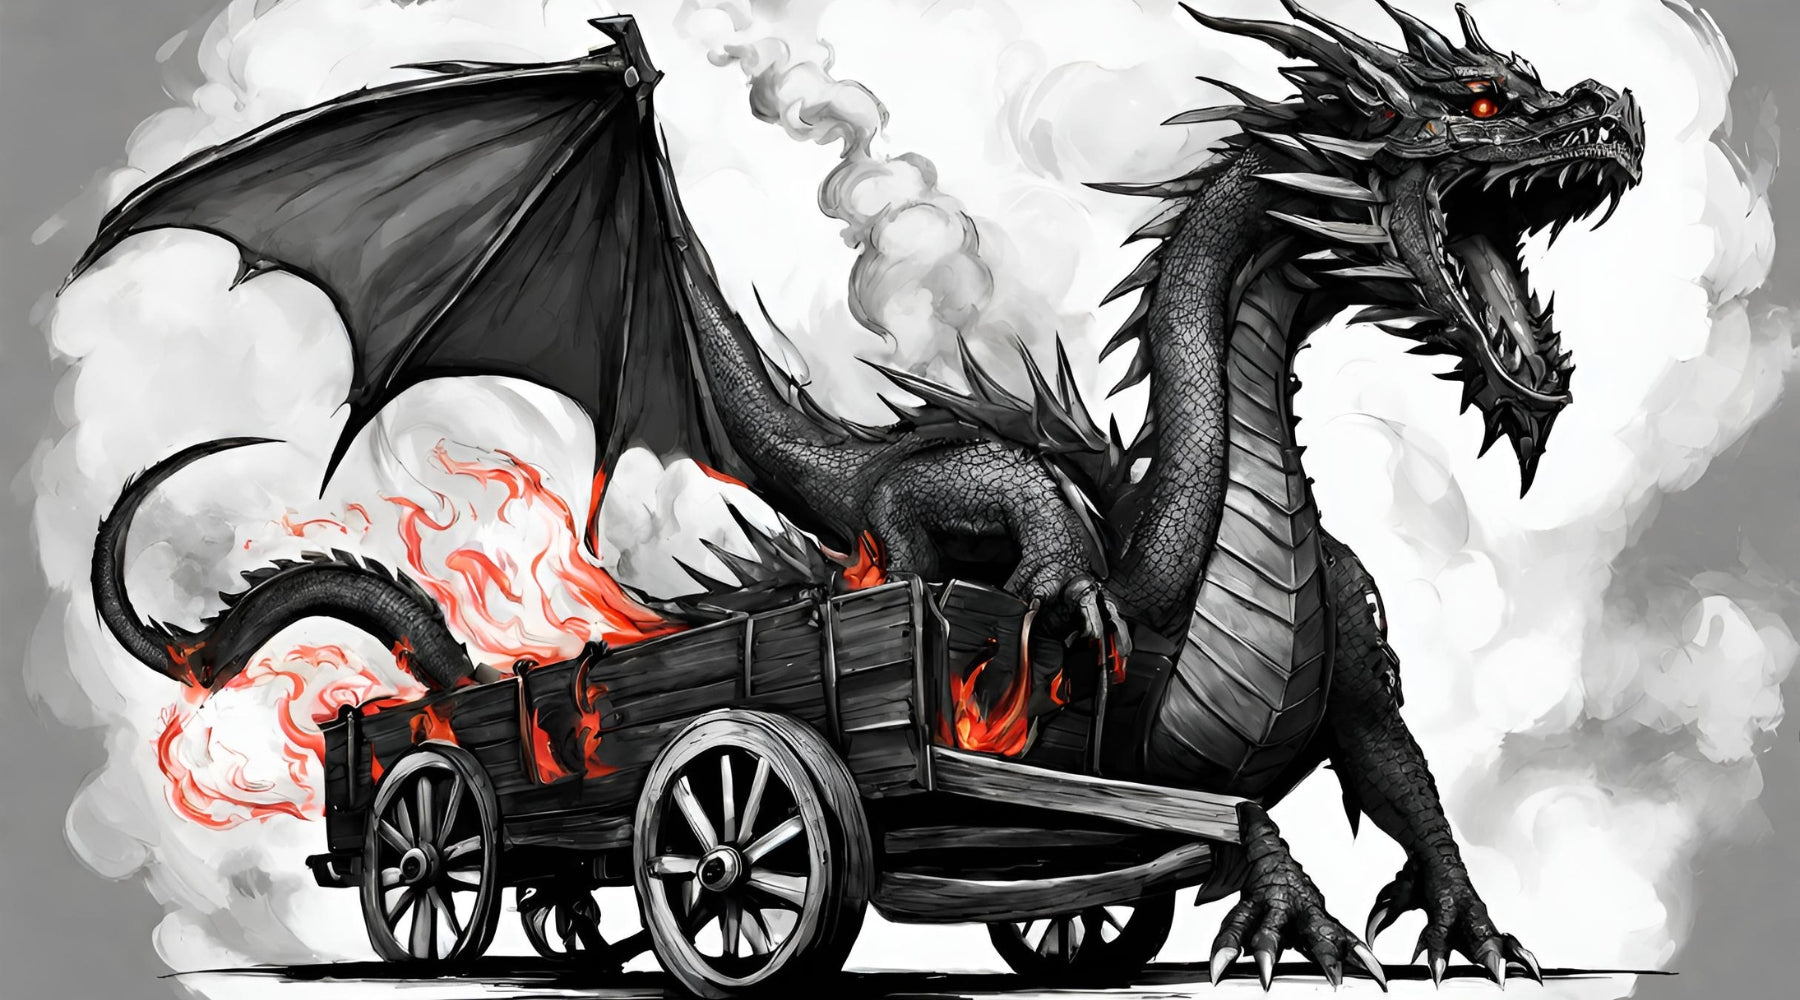 Black Dragon standing next to a burning wagon